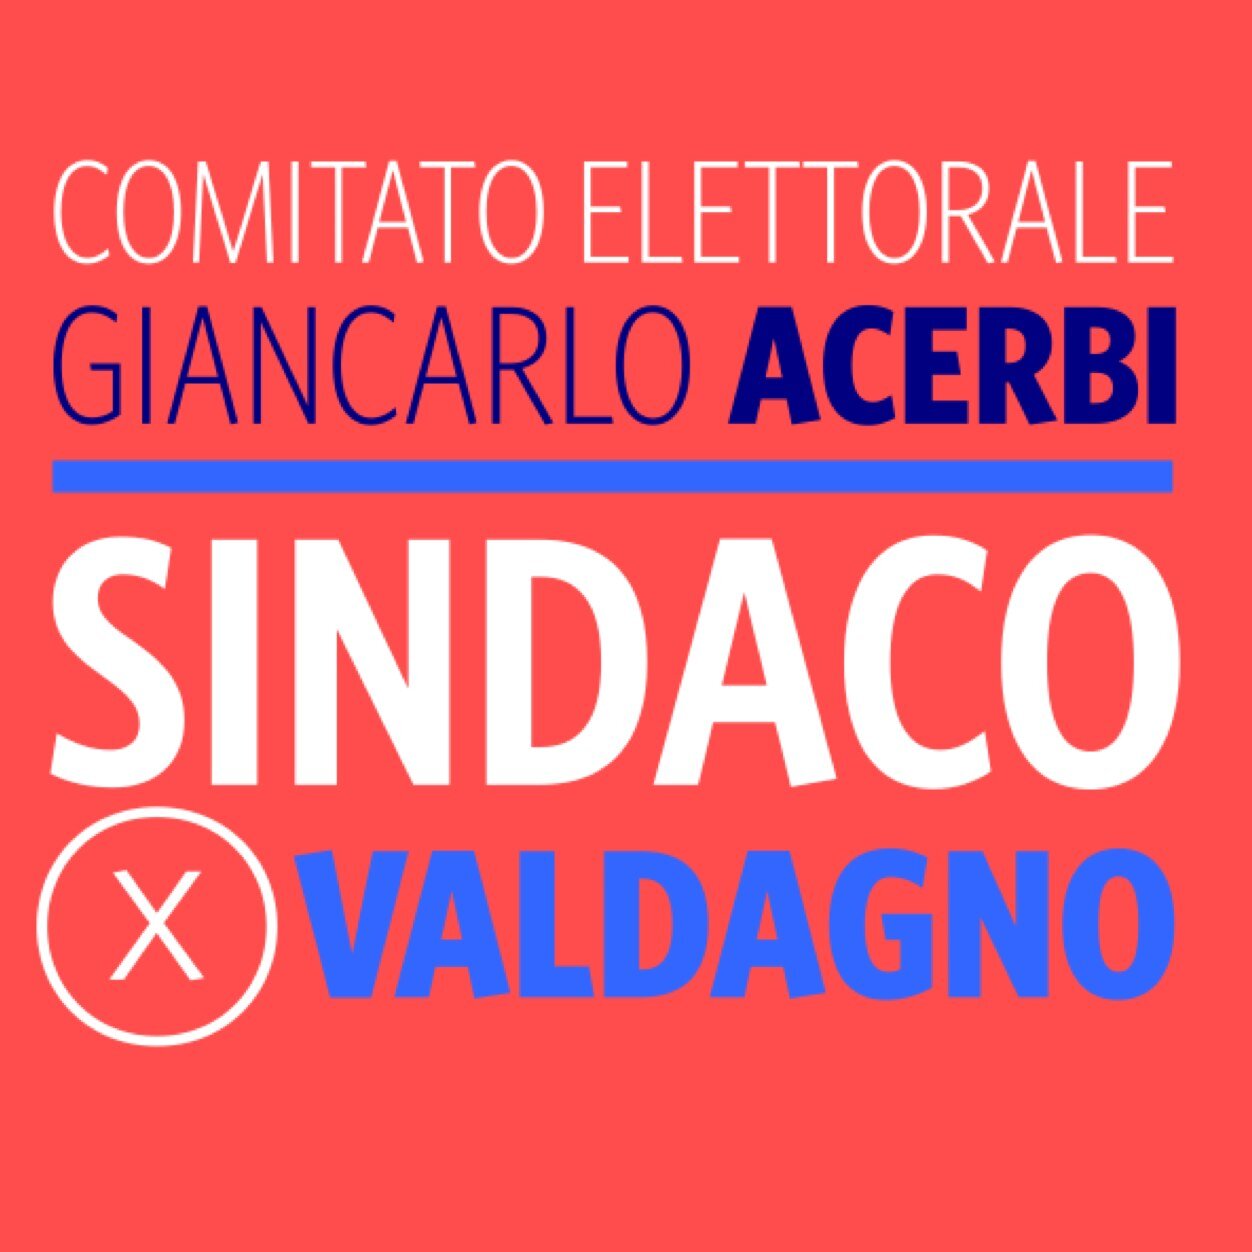 Account ufficiale Comitato Giancarlo Acerbi sindaco - Valdagno | giancarloacerbi.it